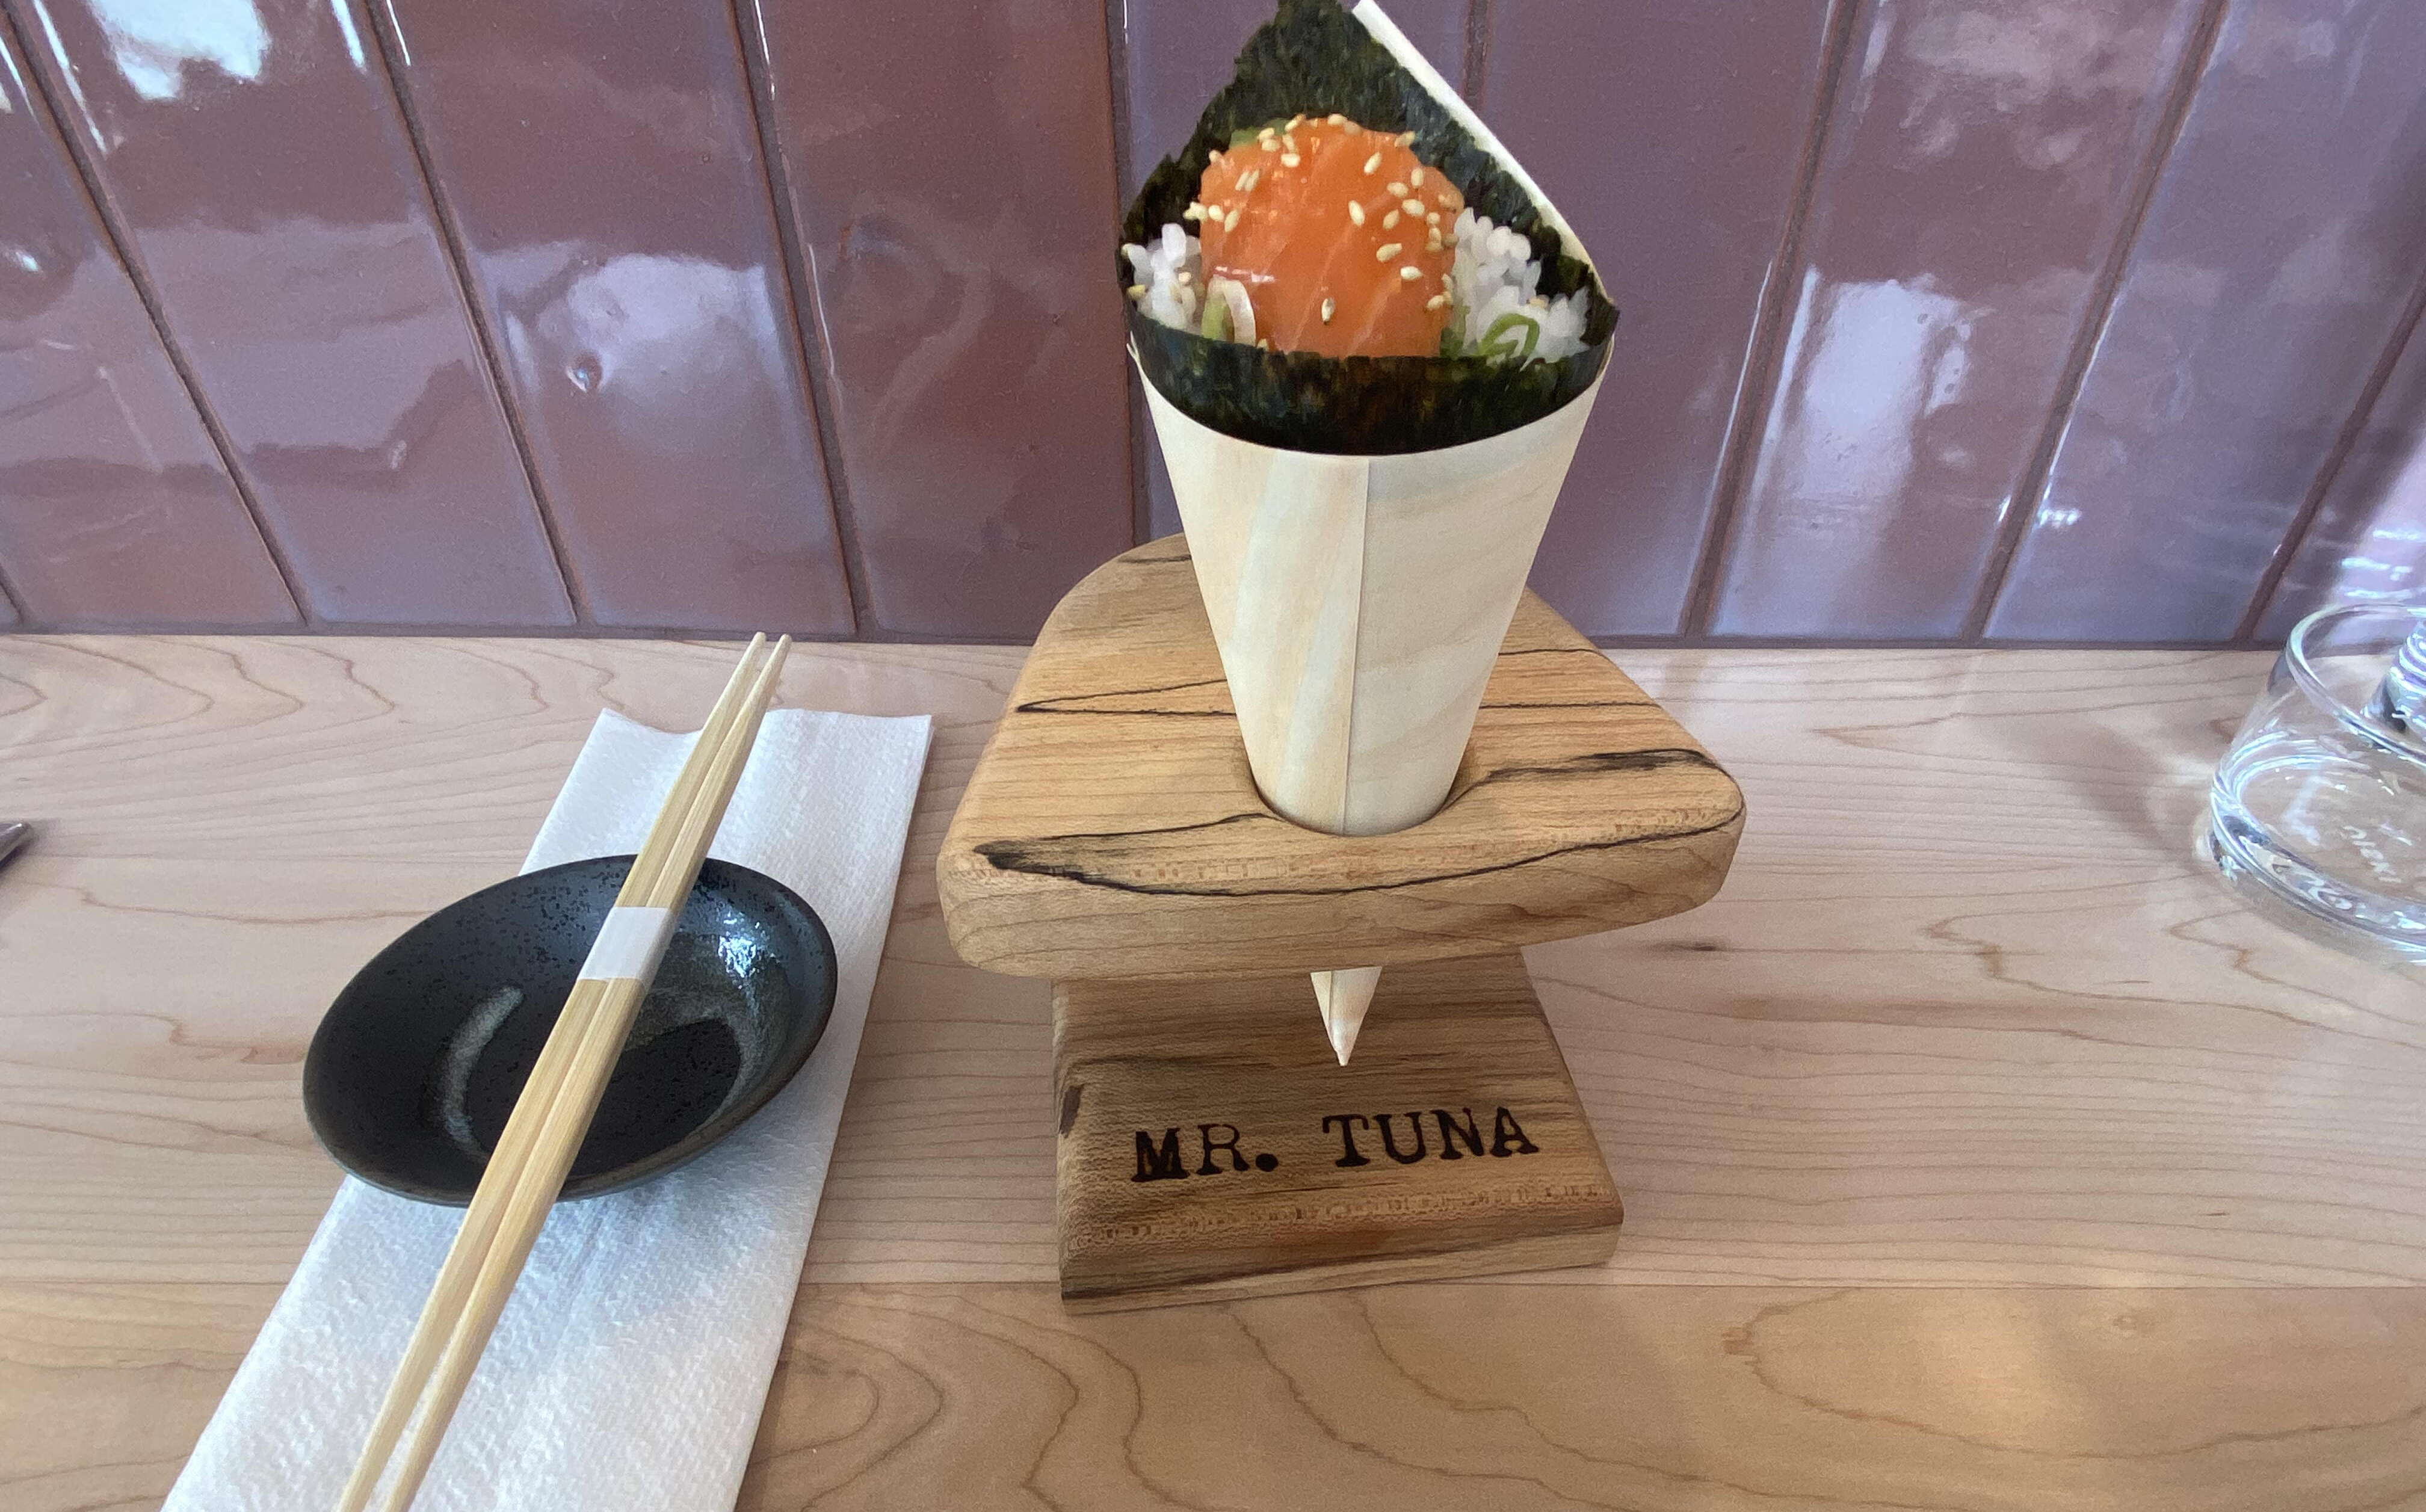 A sushi hand roll from Mr. Tuna 